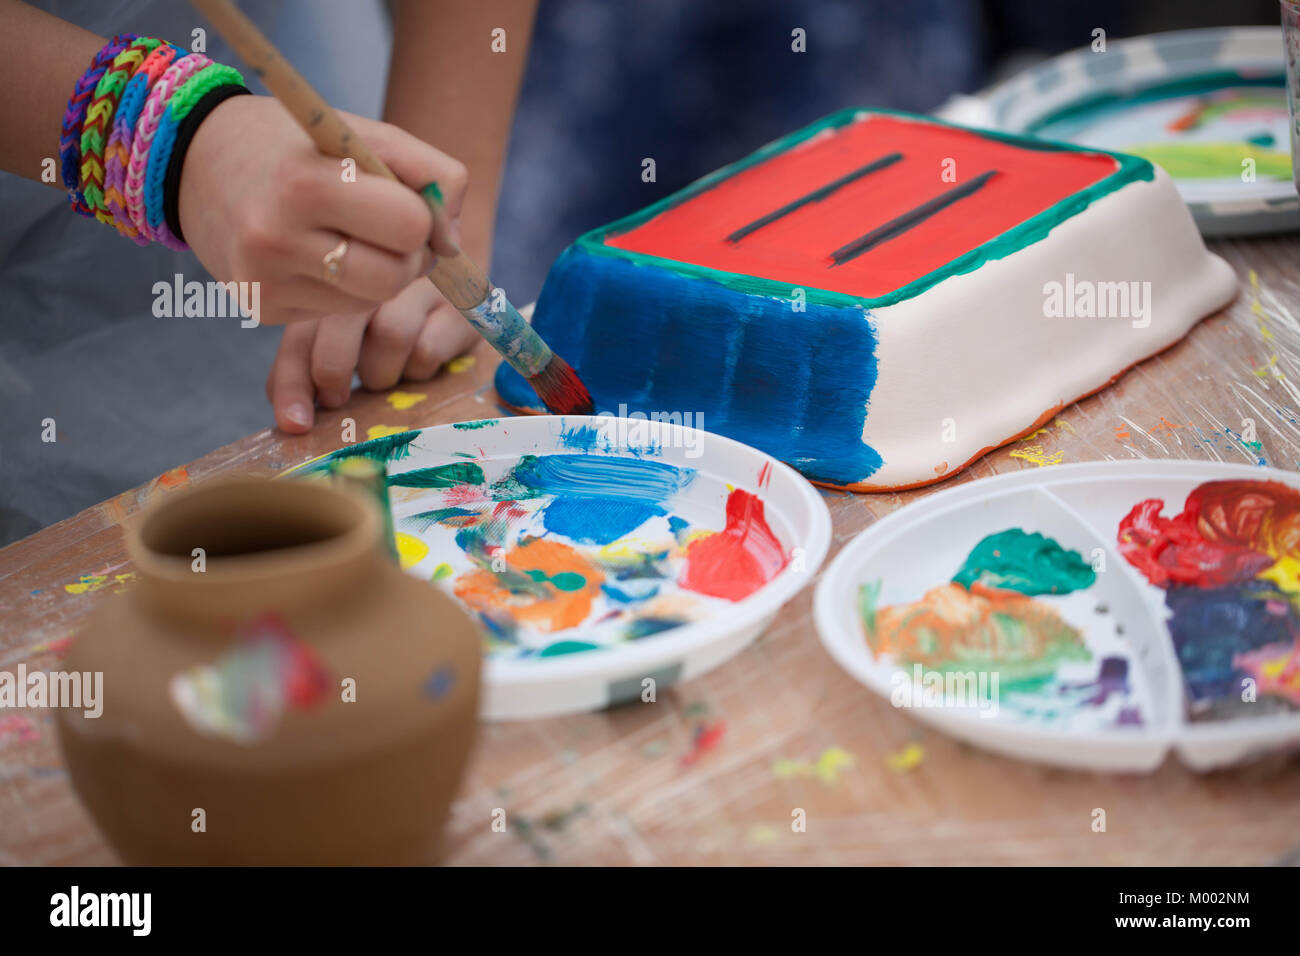 painting ceramics - children painting ceramic dishes Stock Photo